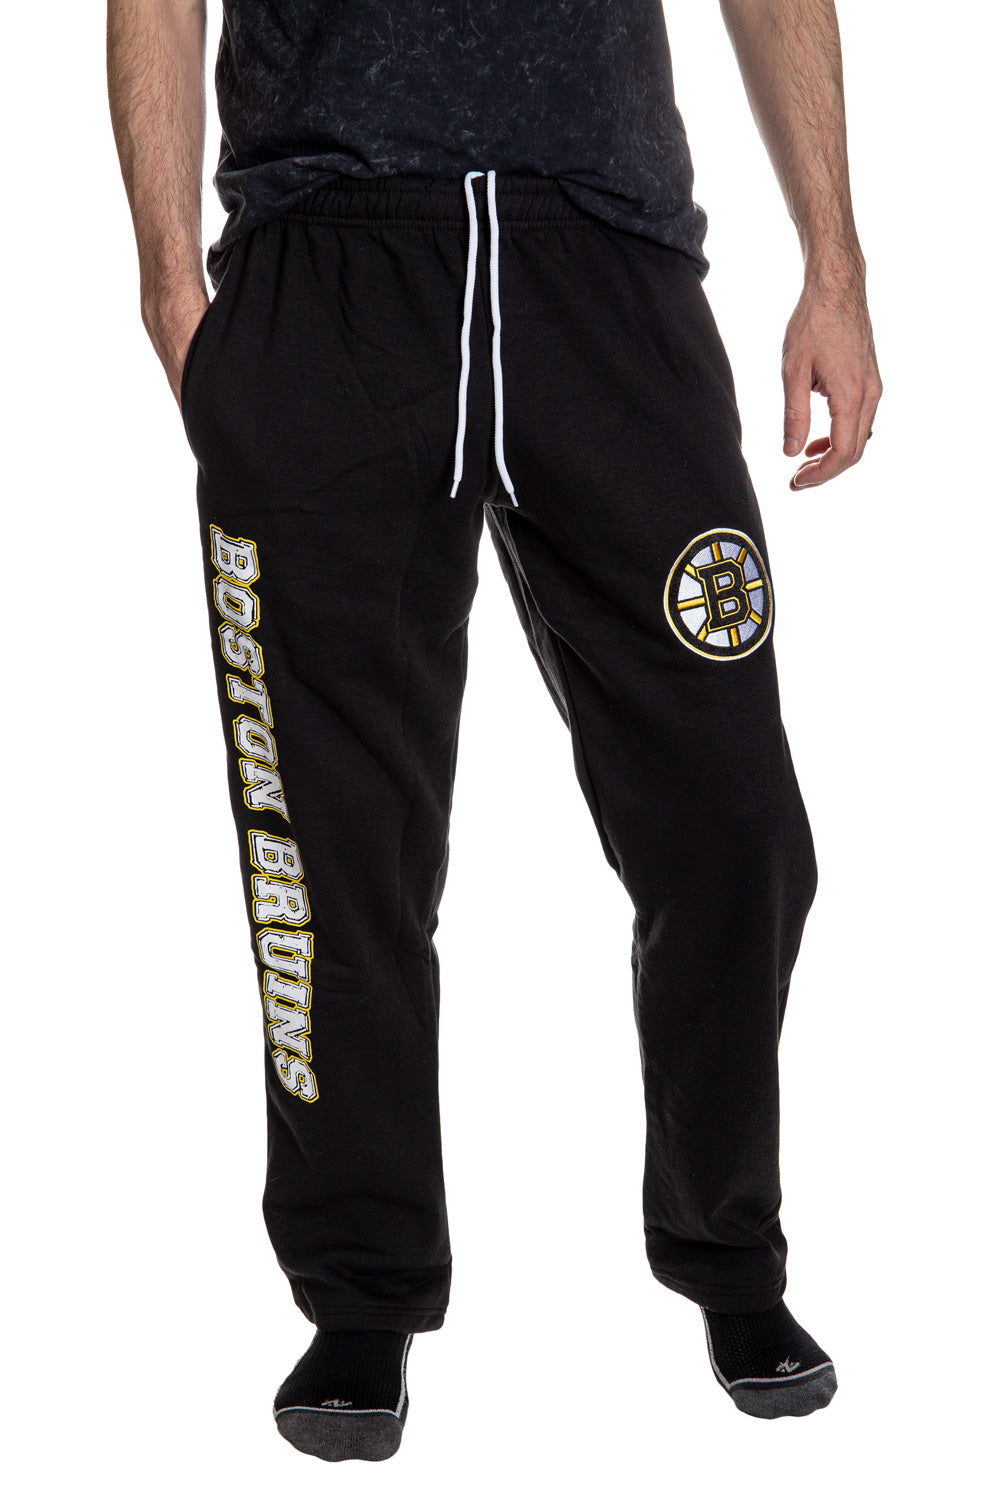 Boston Bruins Premium Fleece Sweatpants Front View.